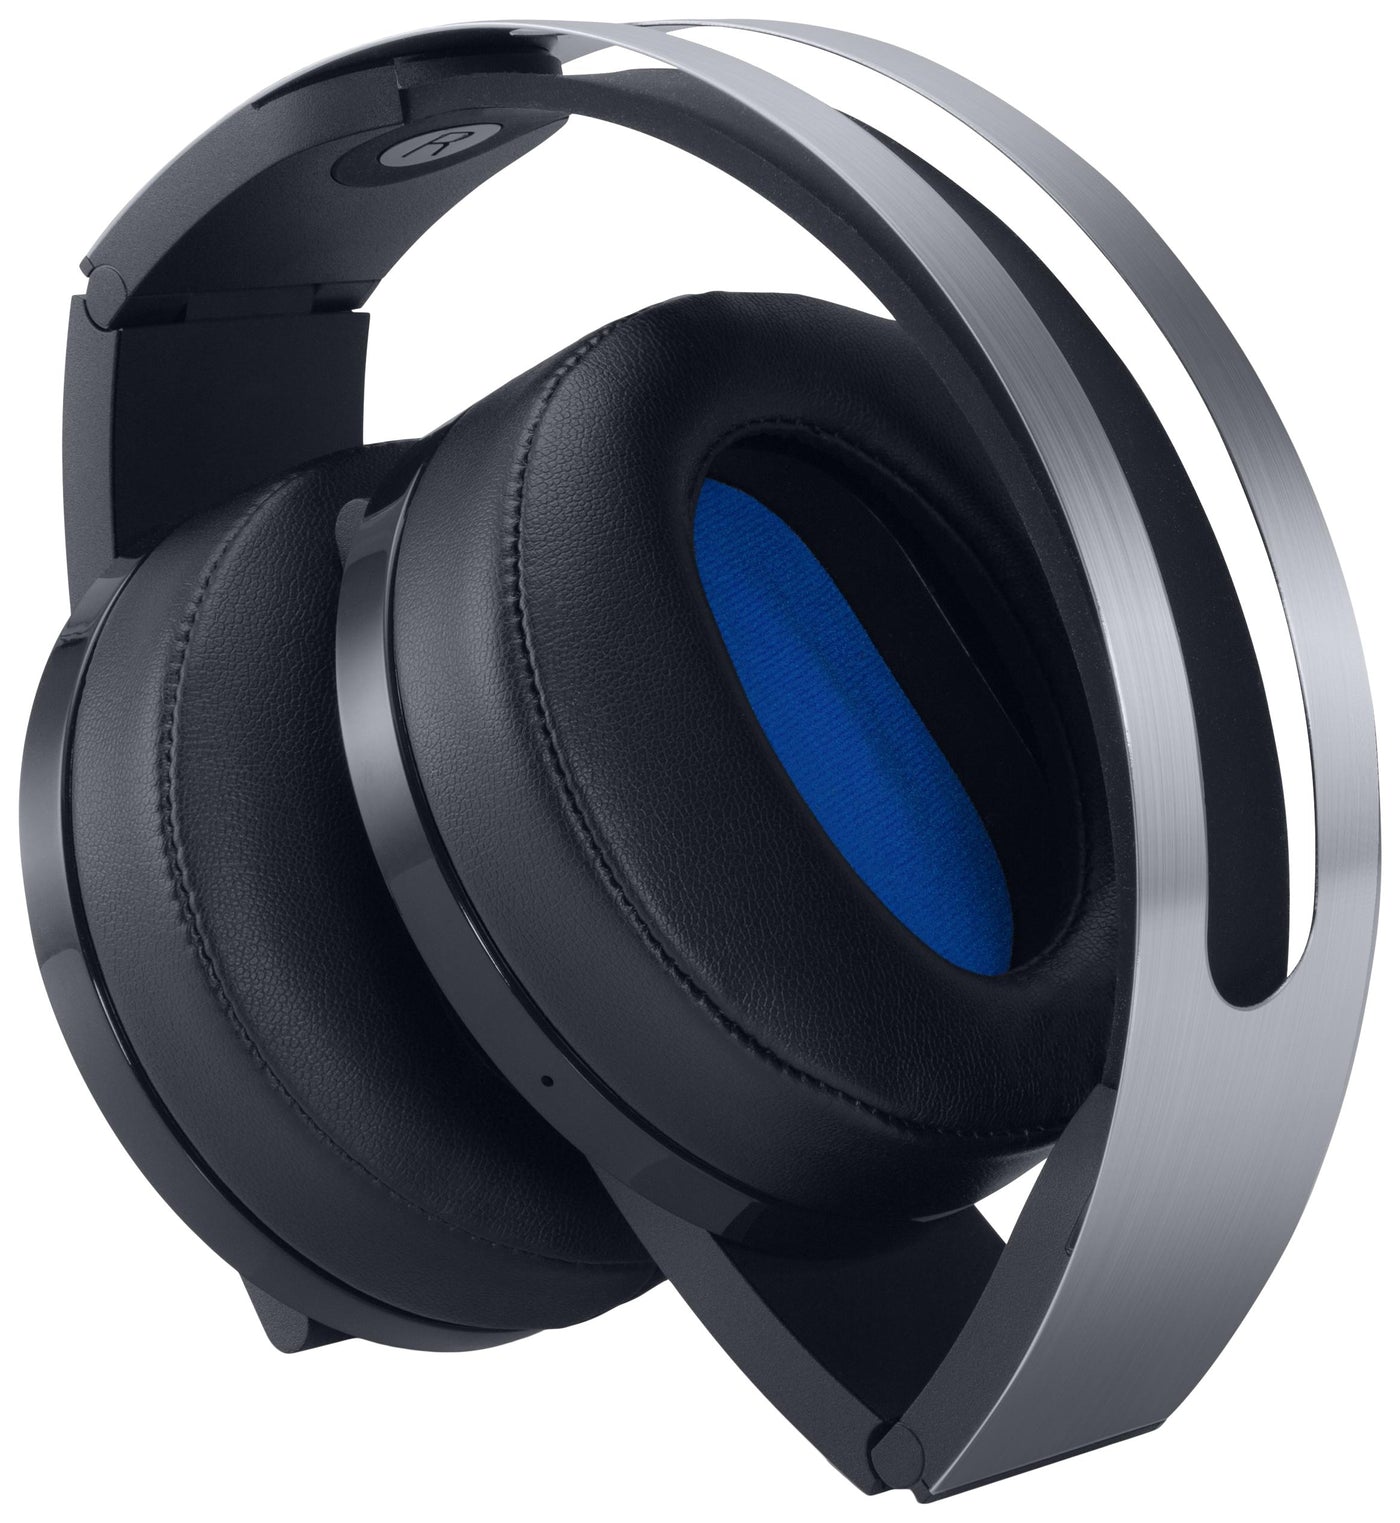 PlayStation Platinum Wireless Headset - PlayStation 4 Accessories Playstation   